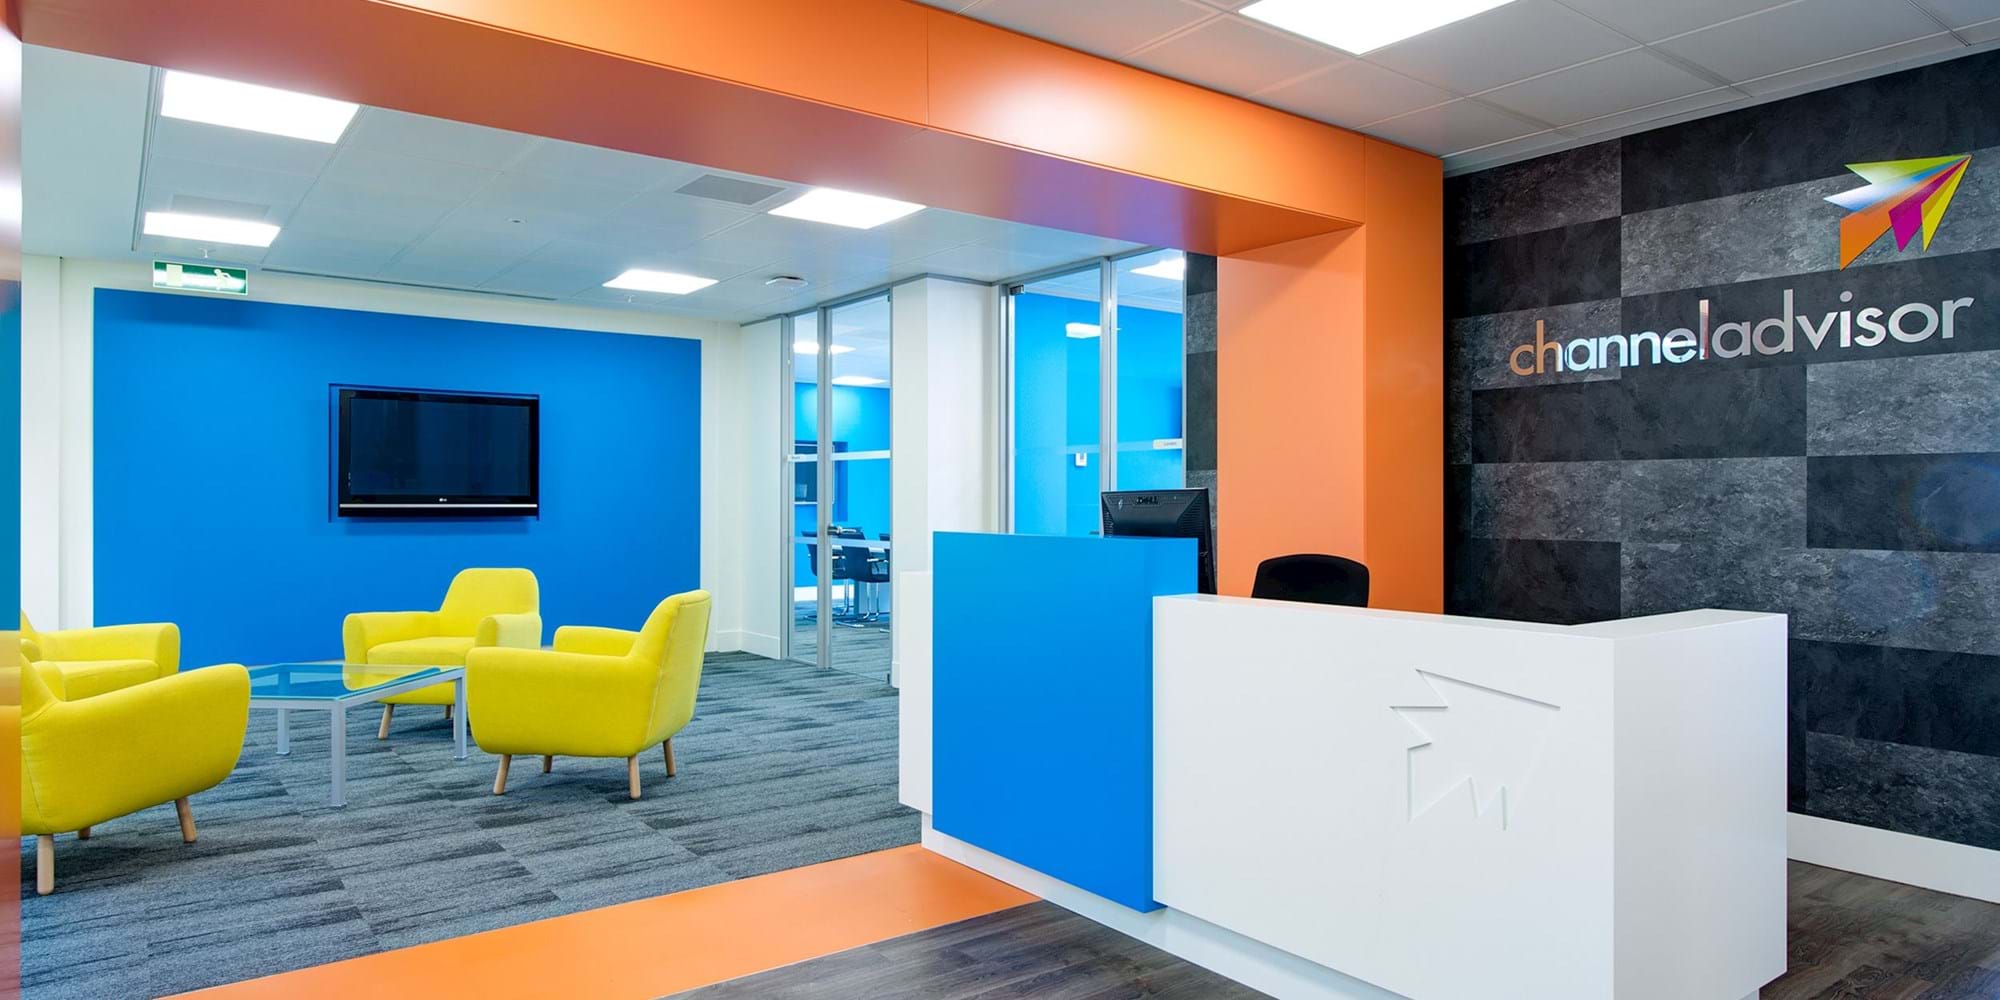 Modus Workspace office design, fit out and refurbishment - Channel Advisor - Reception - Channeladvisor 02 highres sRGB.jpg